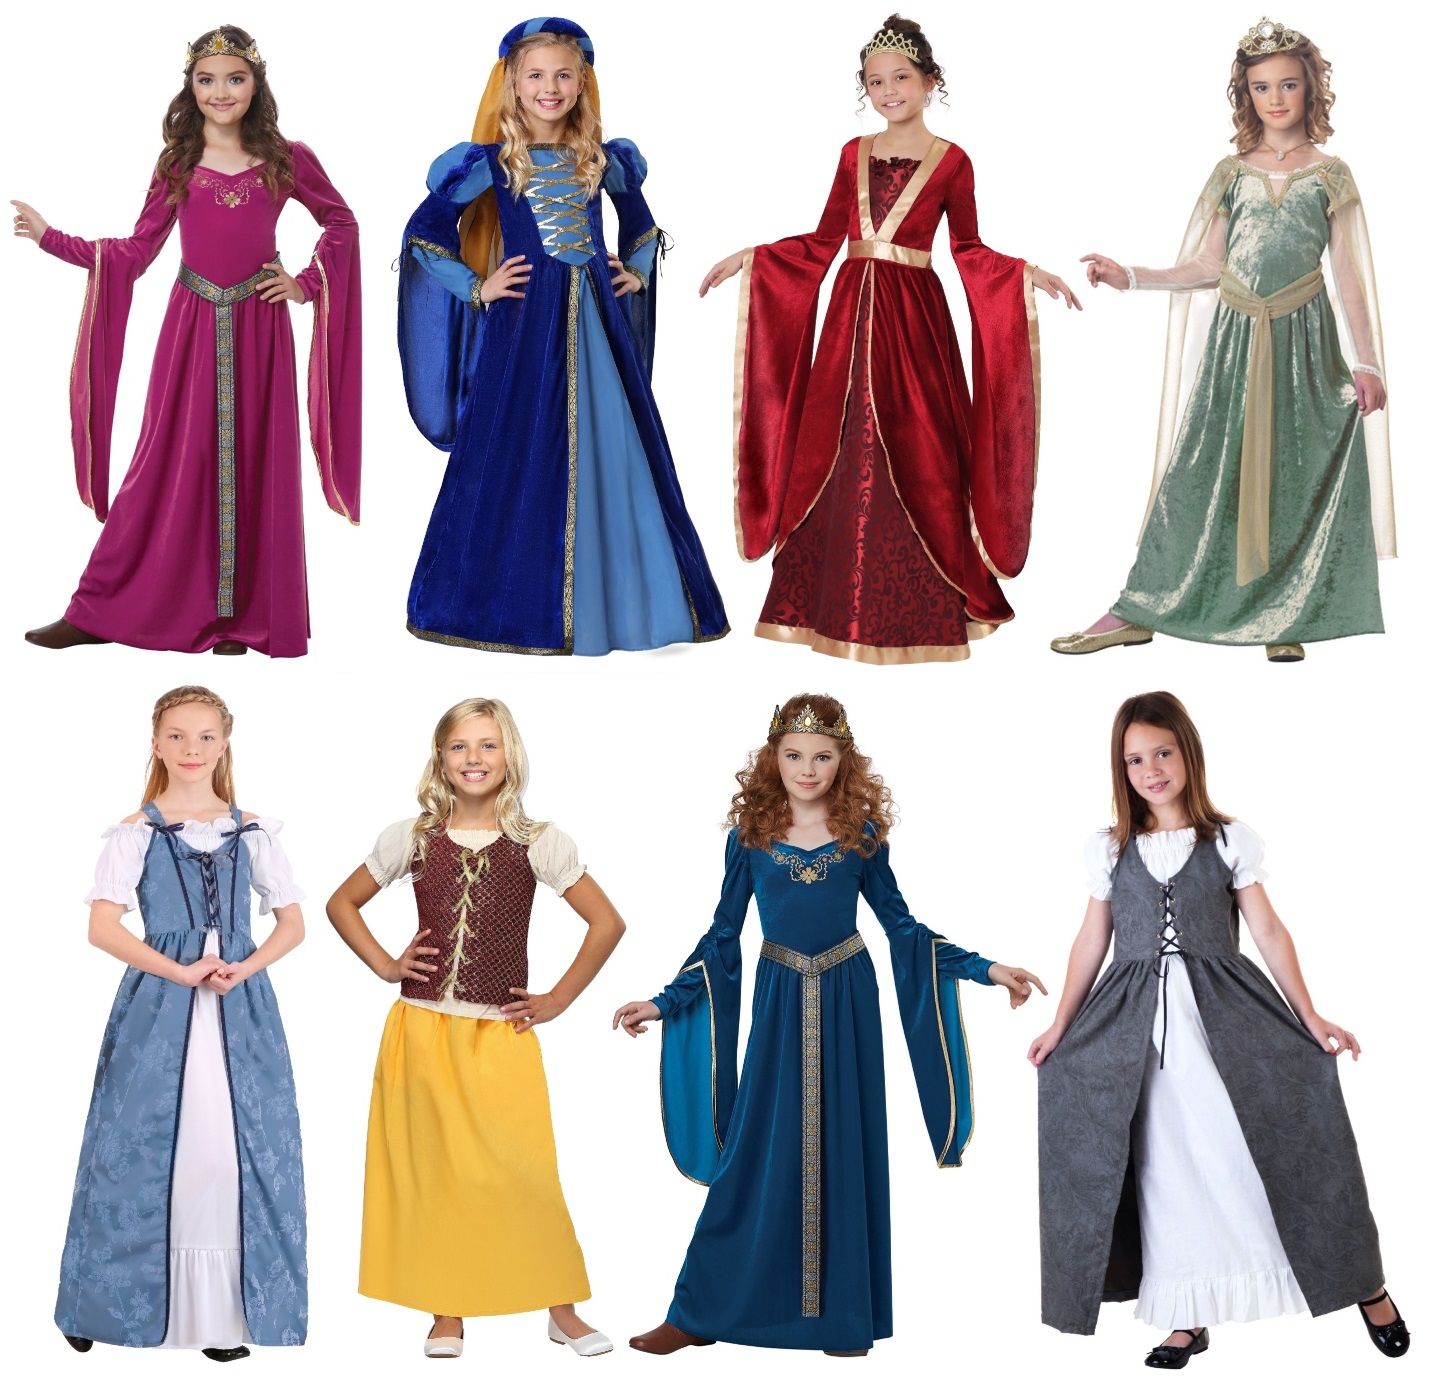 Girls' Renaissance Dresses